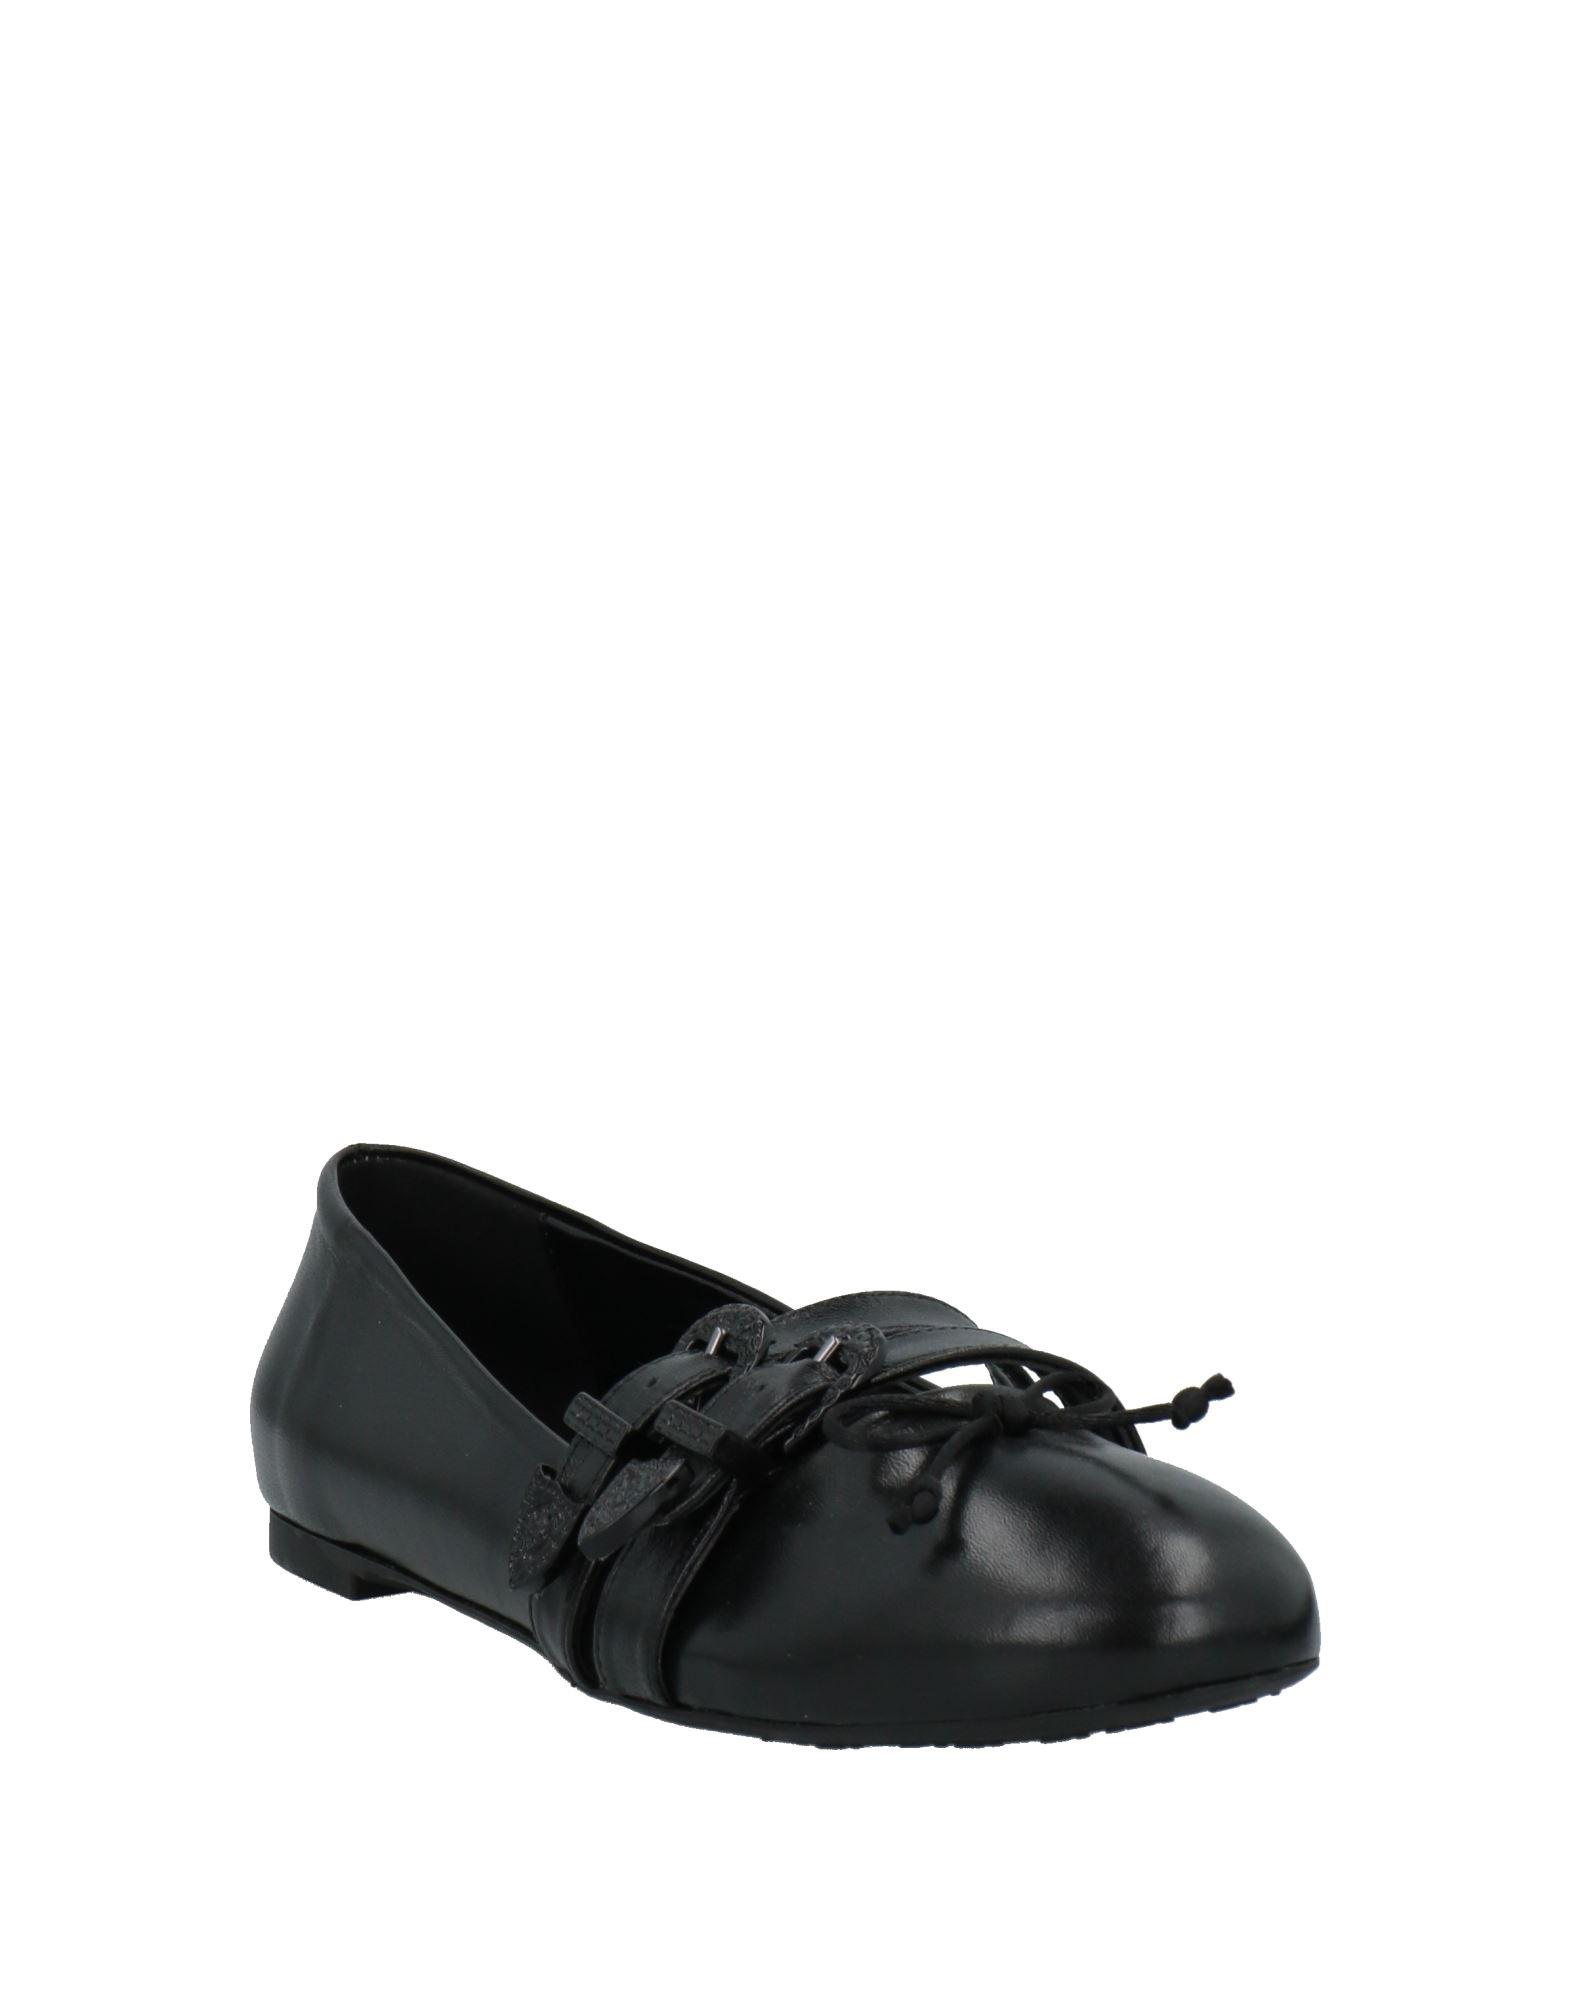 Trussardi Leather Ballet Flats in Black | Lyst